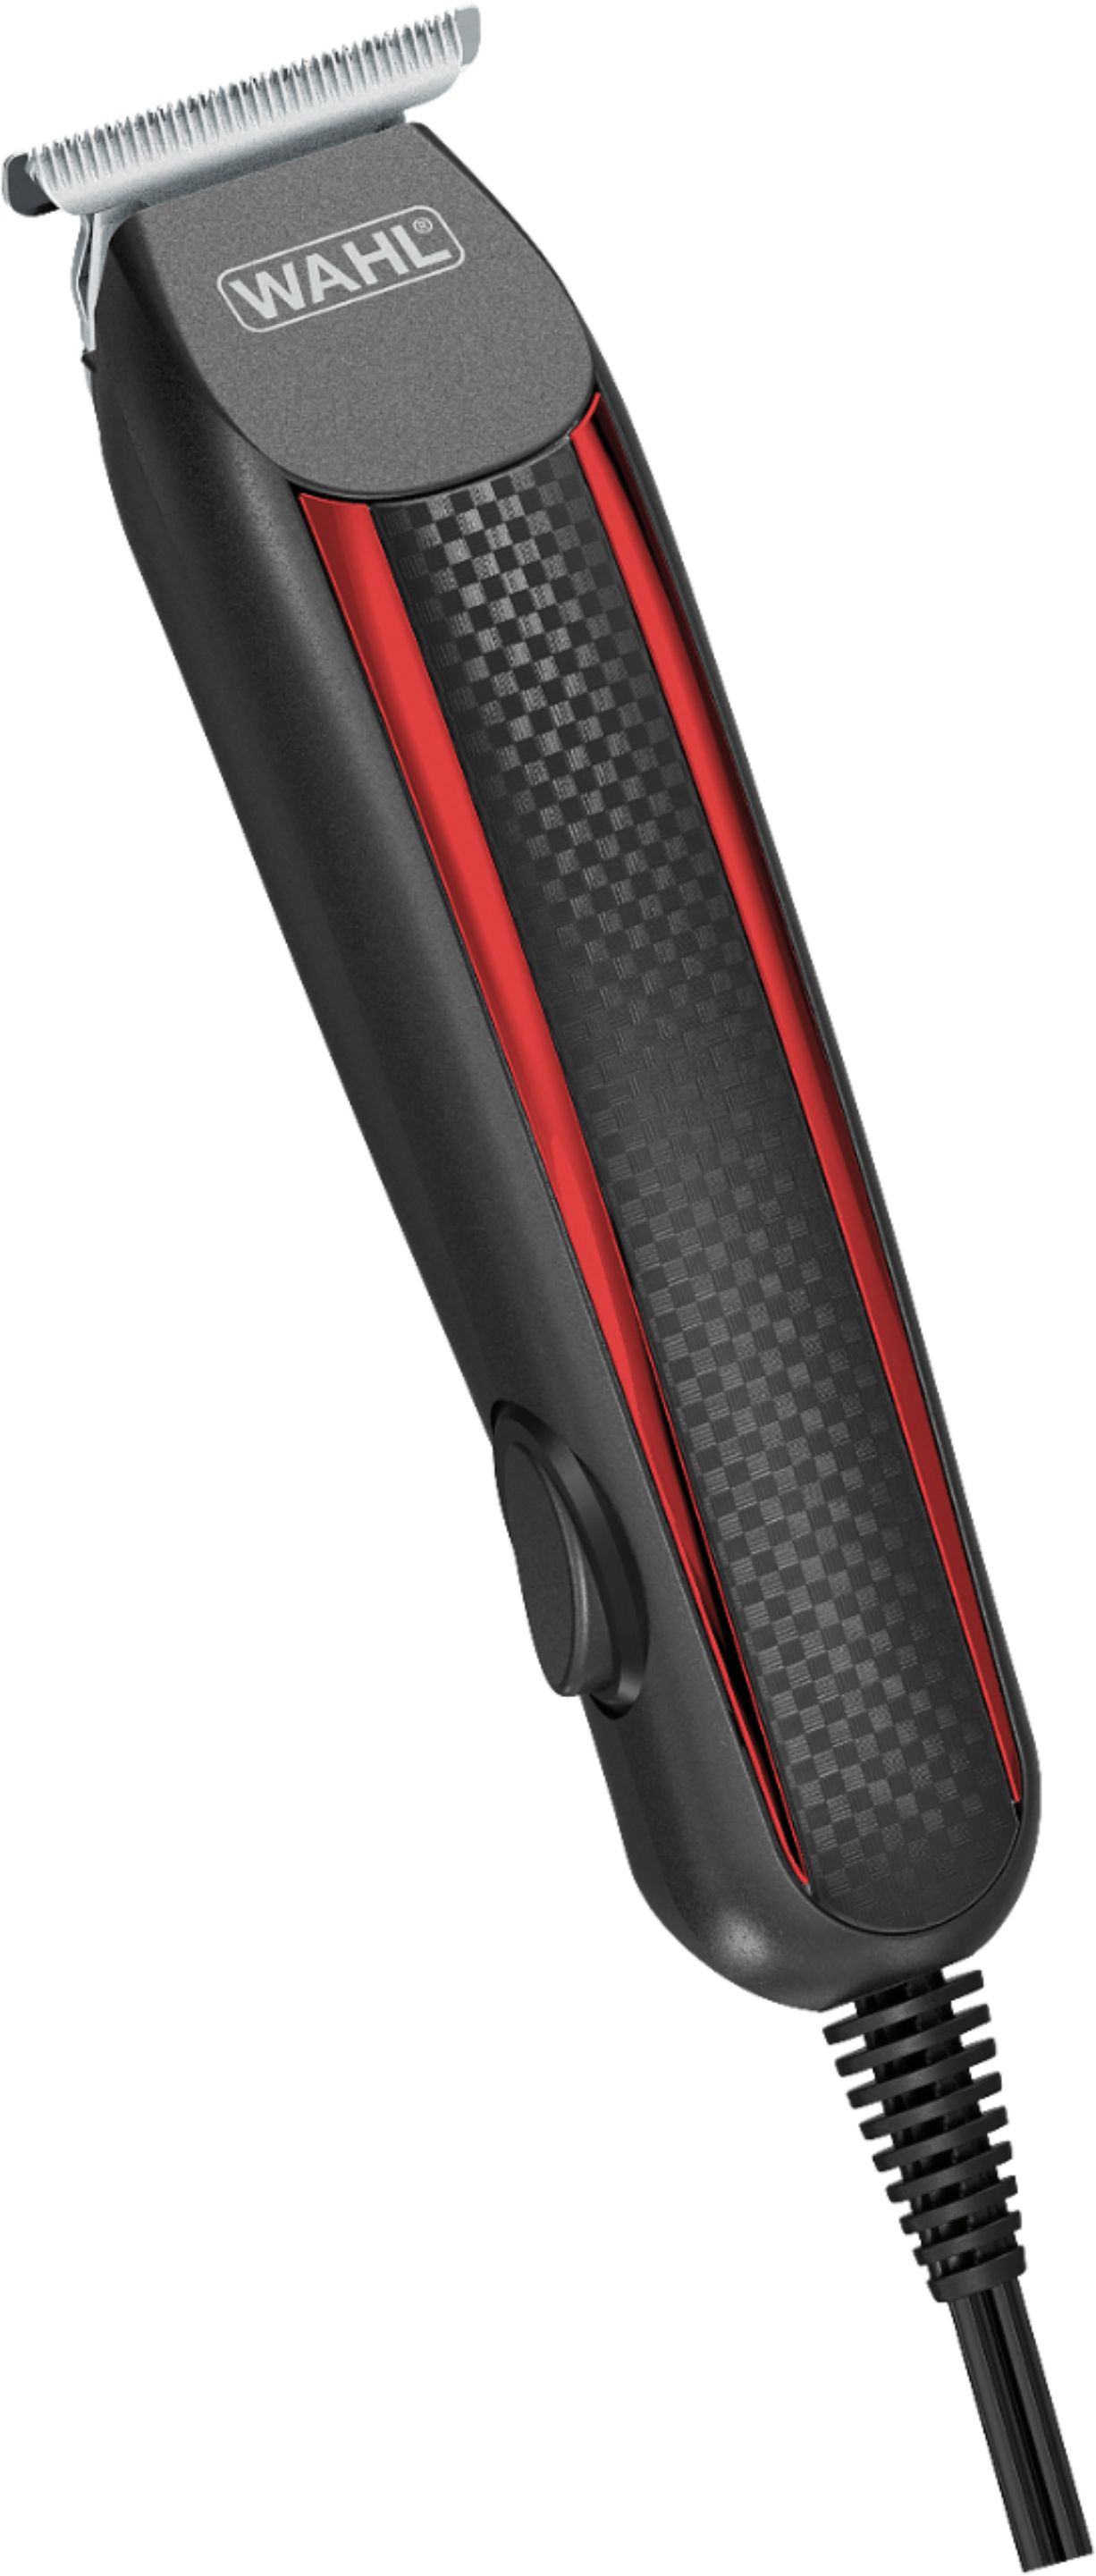 Wahl Edge Pro Corded Trimmer/Shaver black 09686-300 - Best Buy